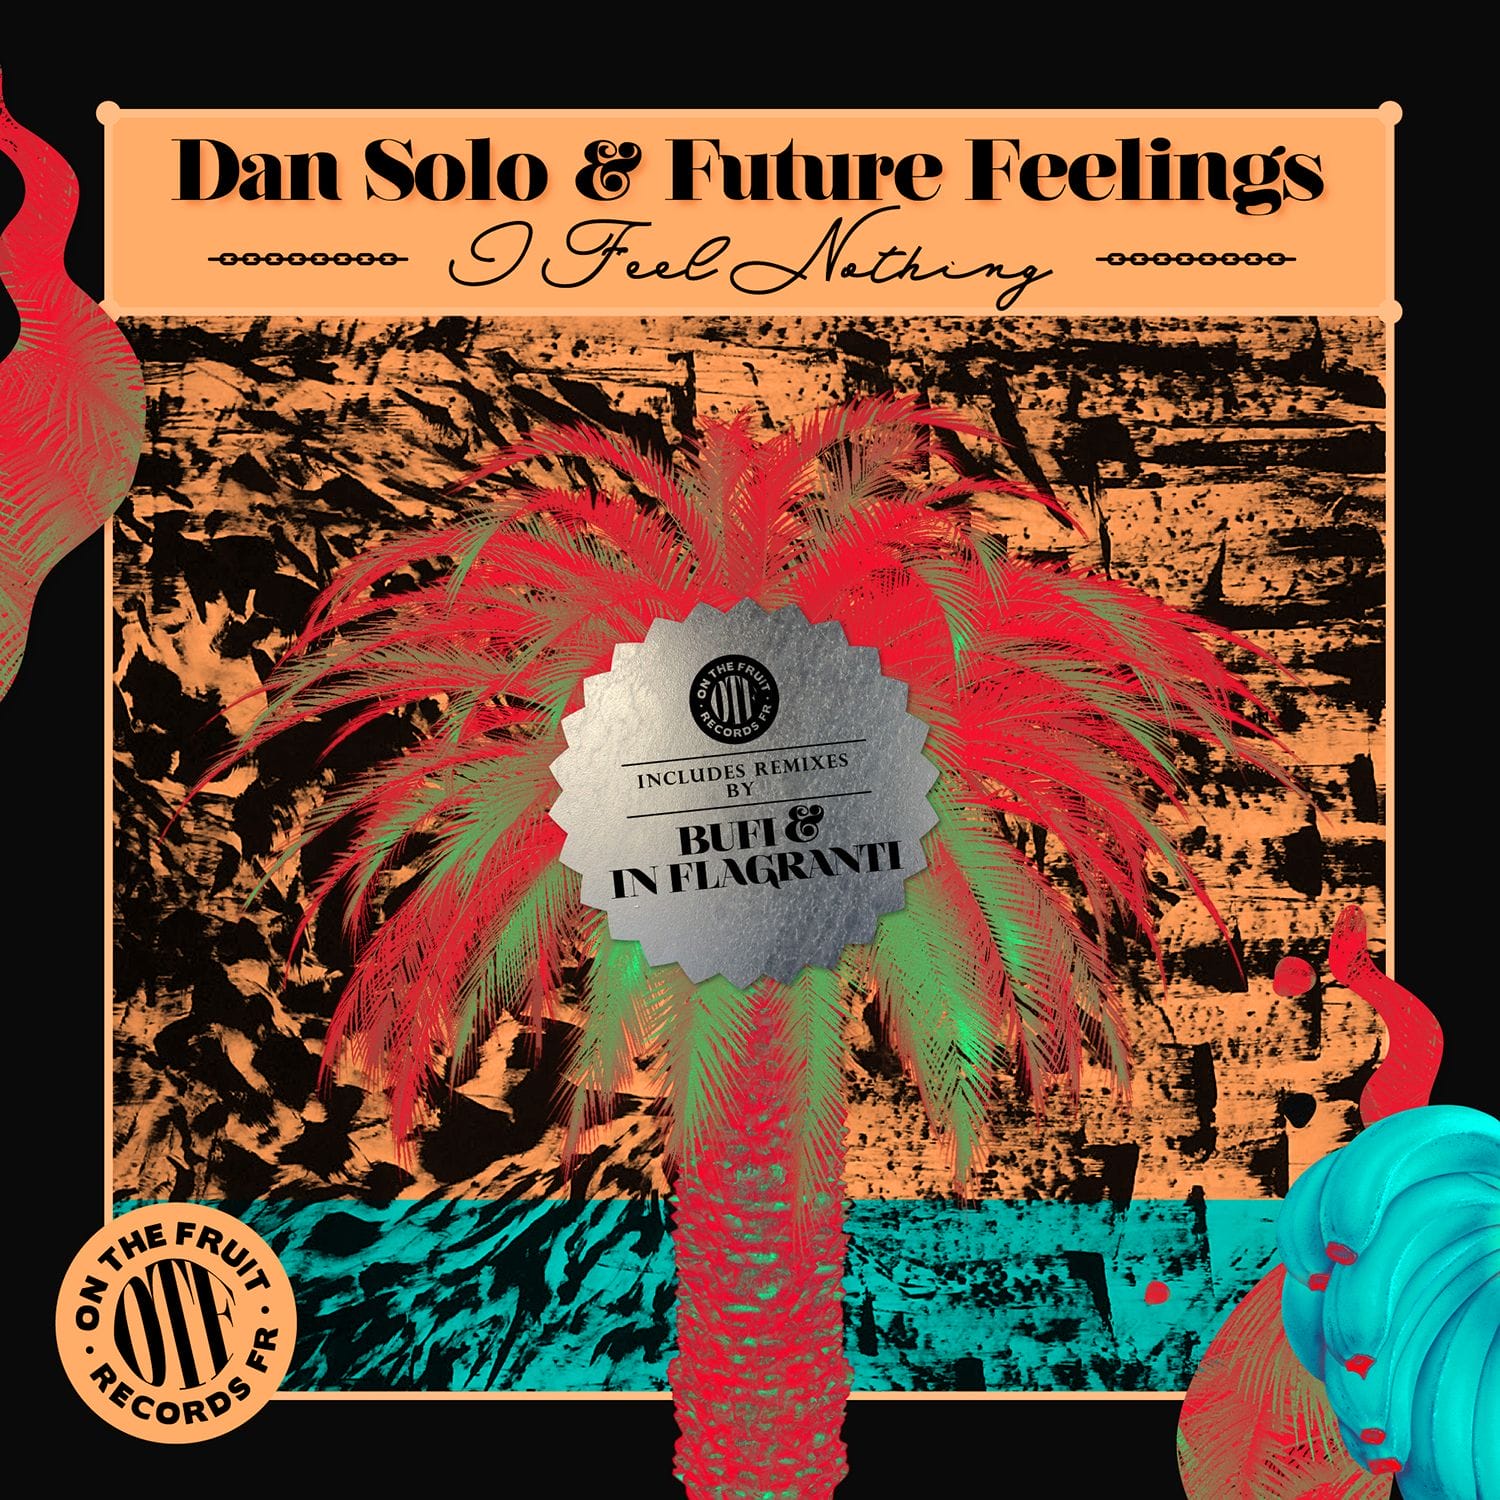 Dan Solo & Future Feelings - I Feel Nothing 1